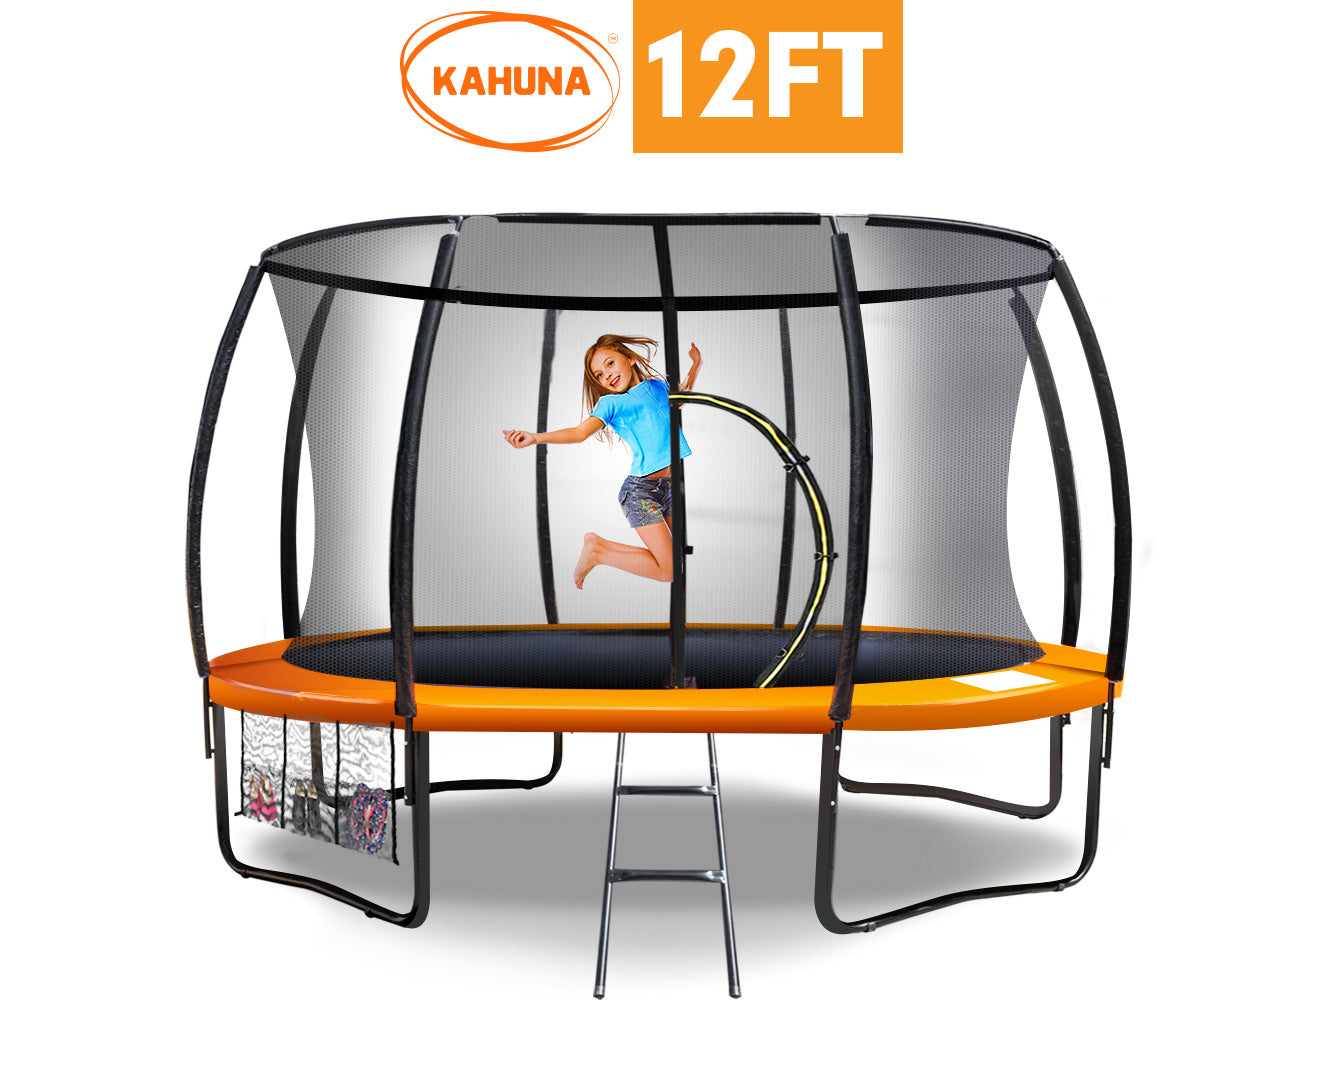 Kahuna 12ft Trampoline Free Ladder Spring Mat Net Safety Pad Cover Round Enclosure - Orange